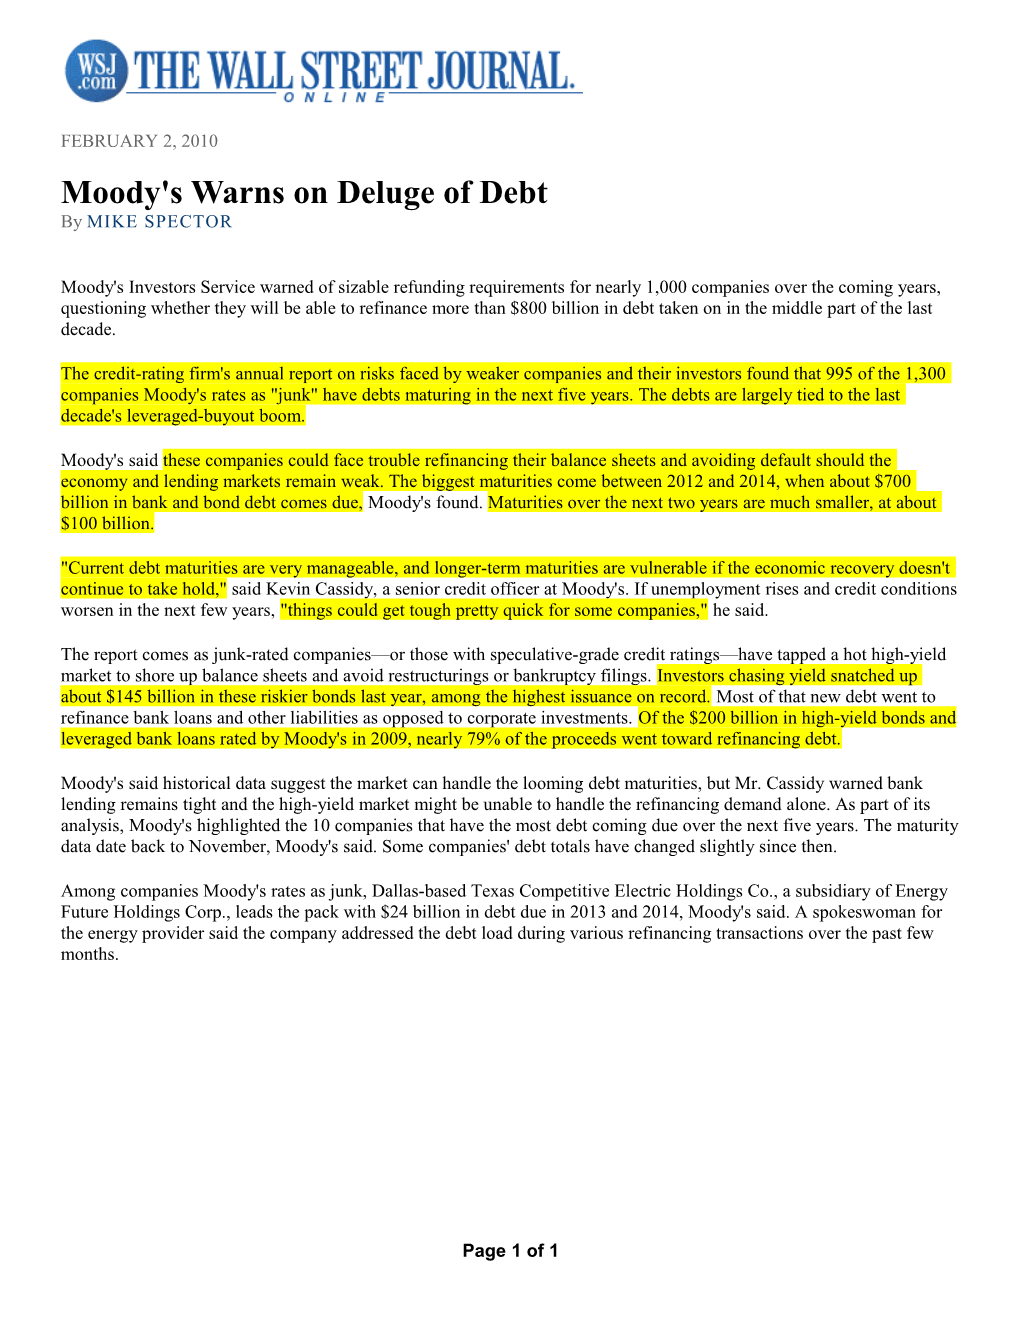 Moody's Warns on Deluge of Debt